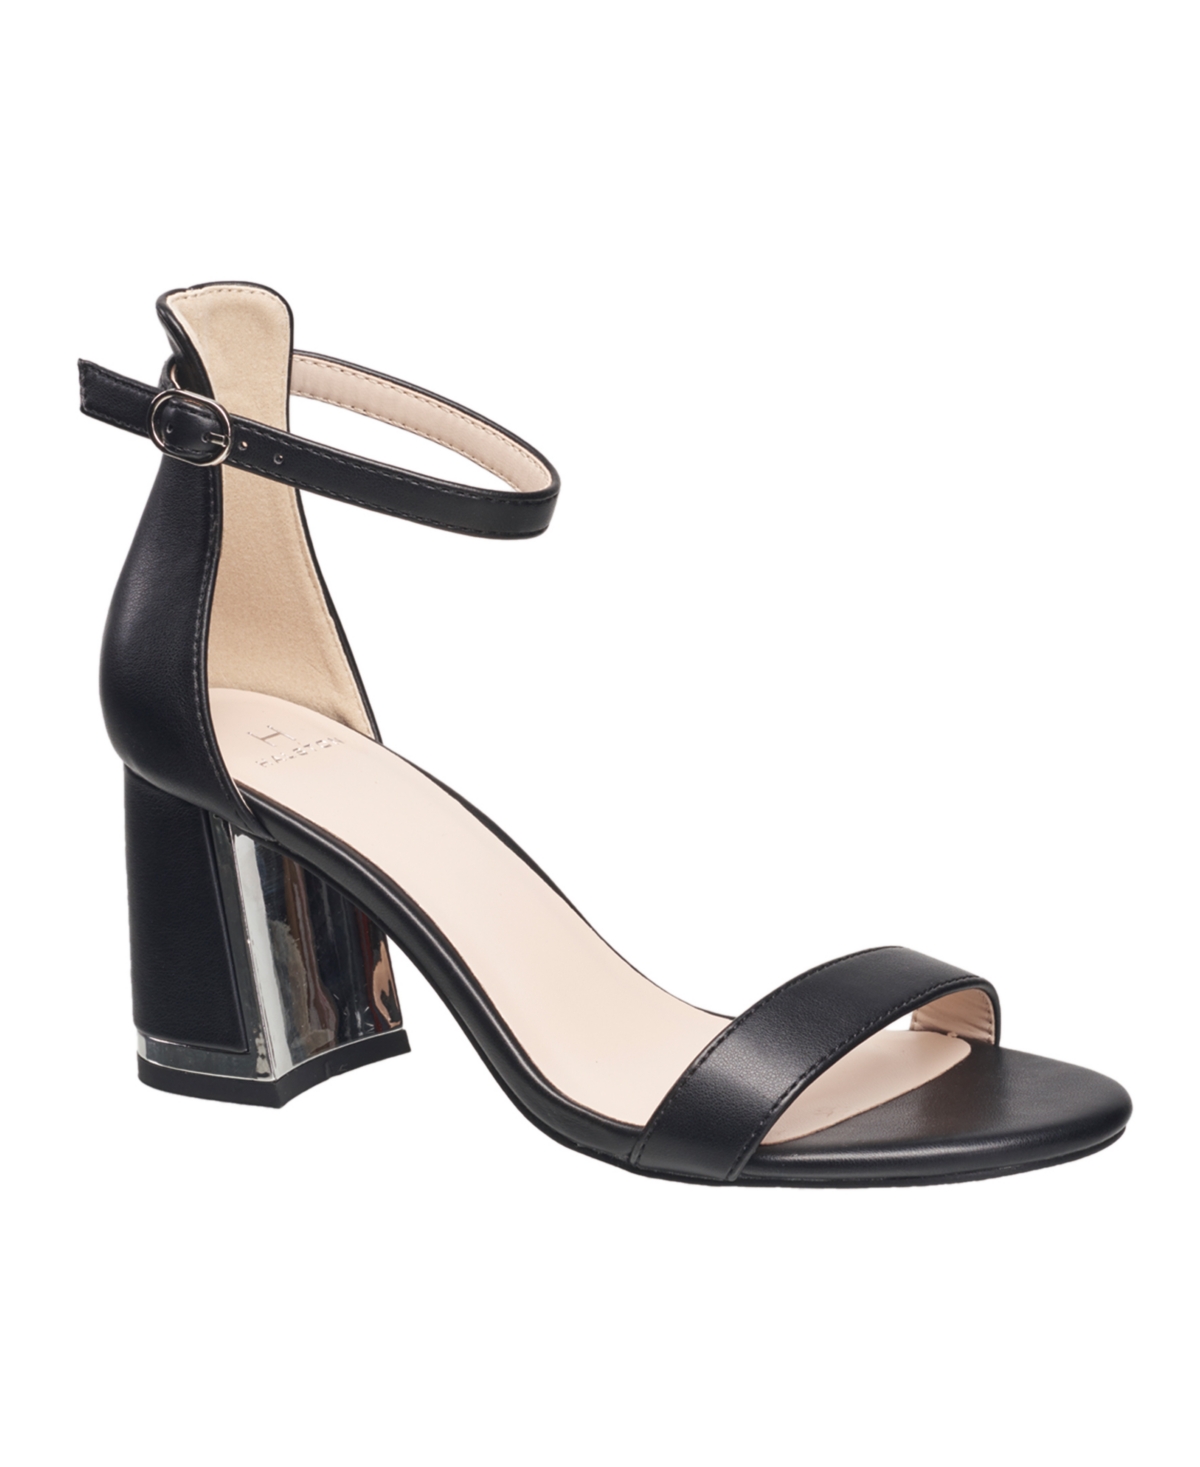 Women's Ankle Strap Dress Sandals - Black